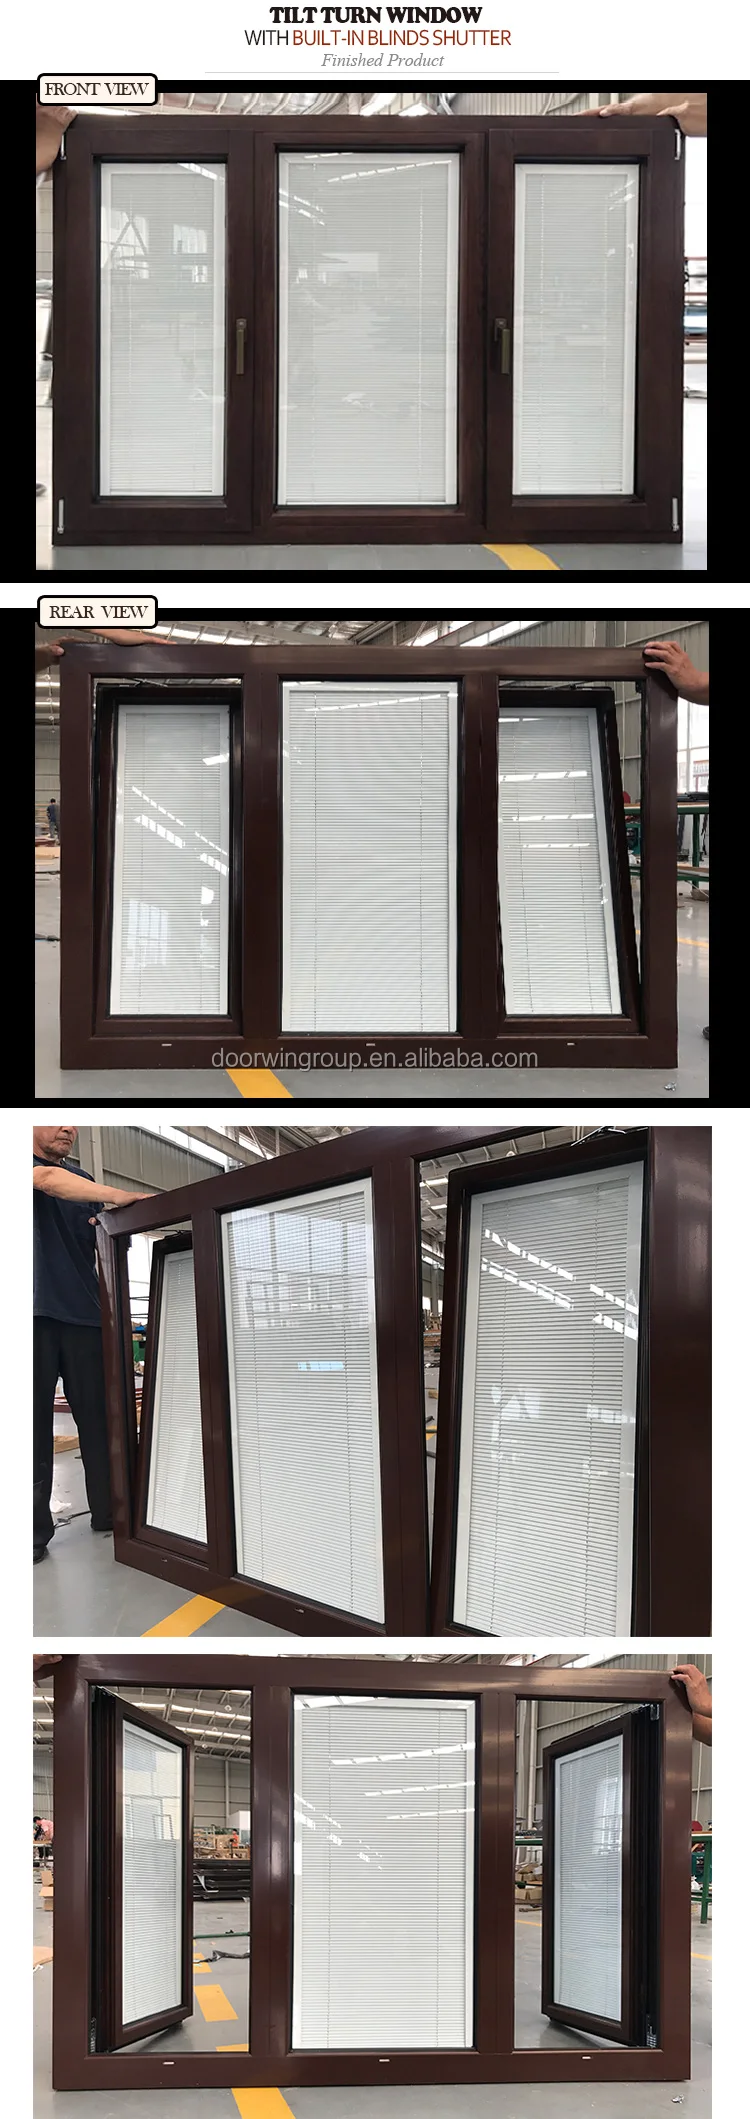 Europe style window grill design european blinds tilt turn windows